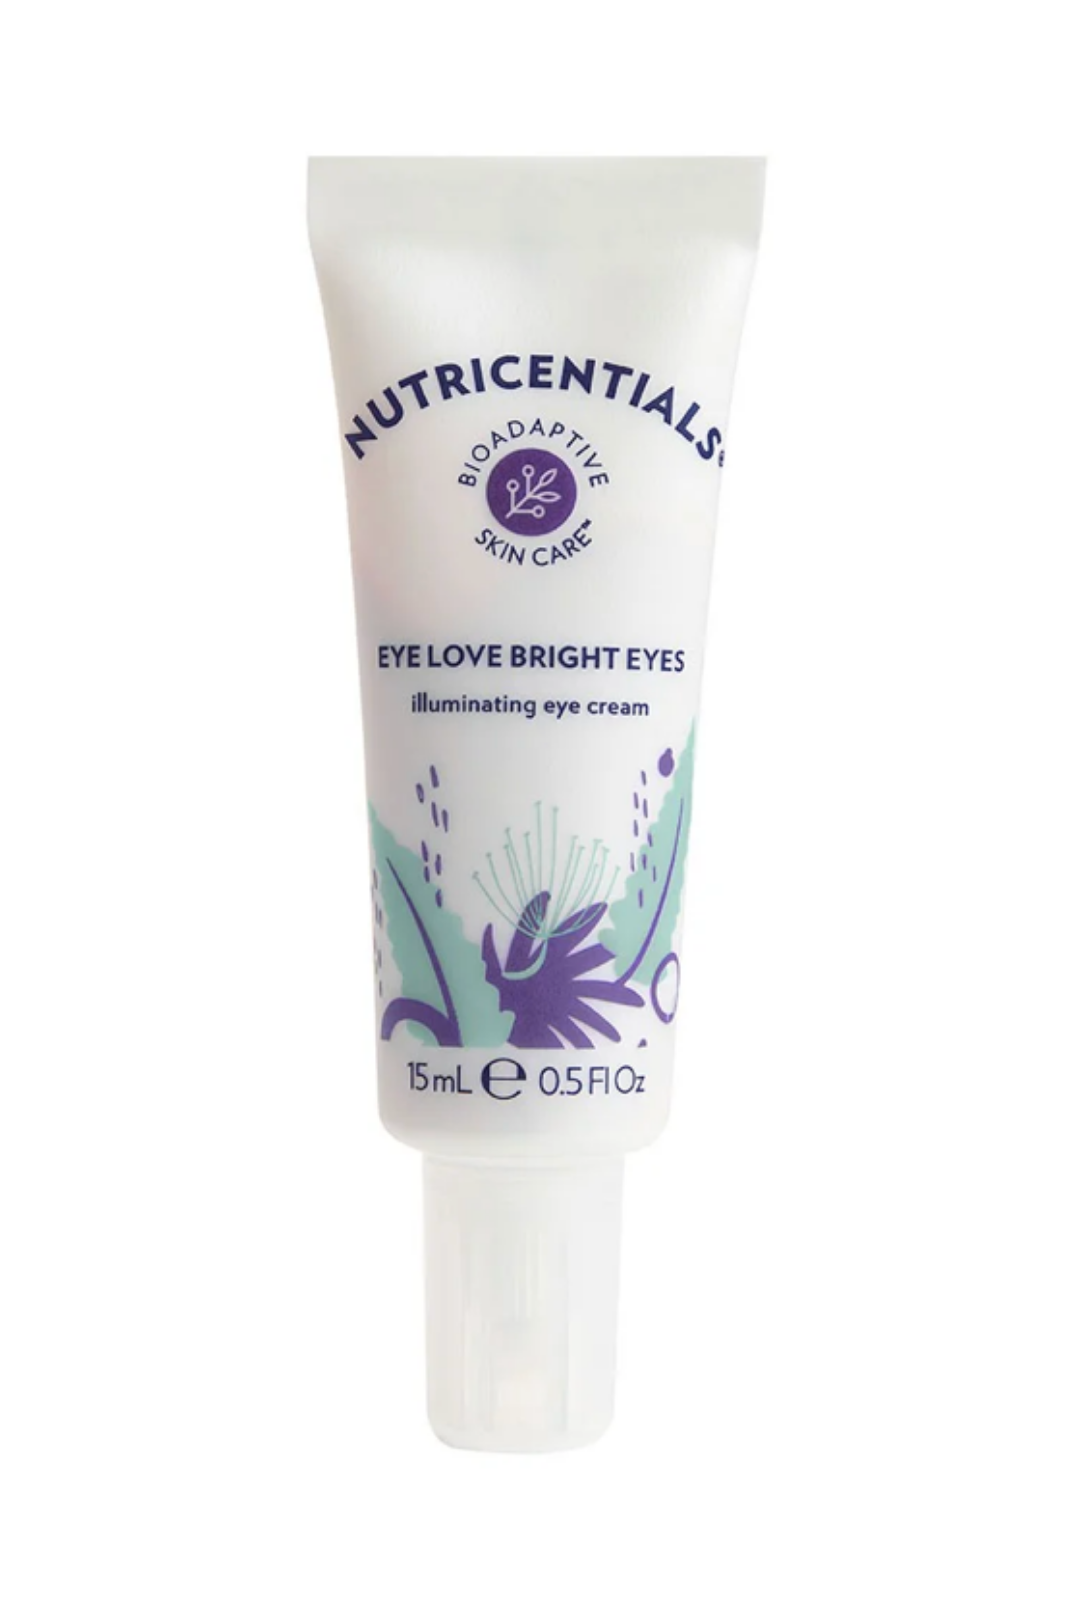 Nutricentials® Eye Love Bright Eyes - $5 off!